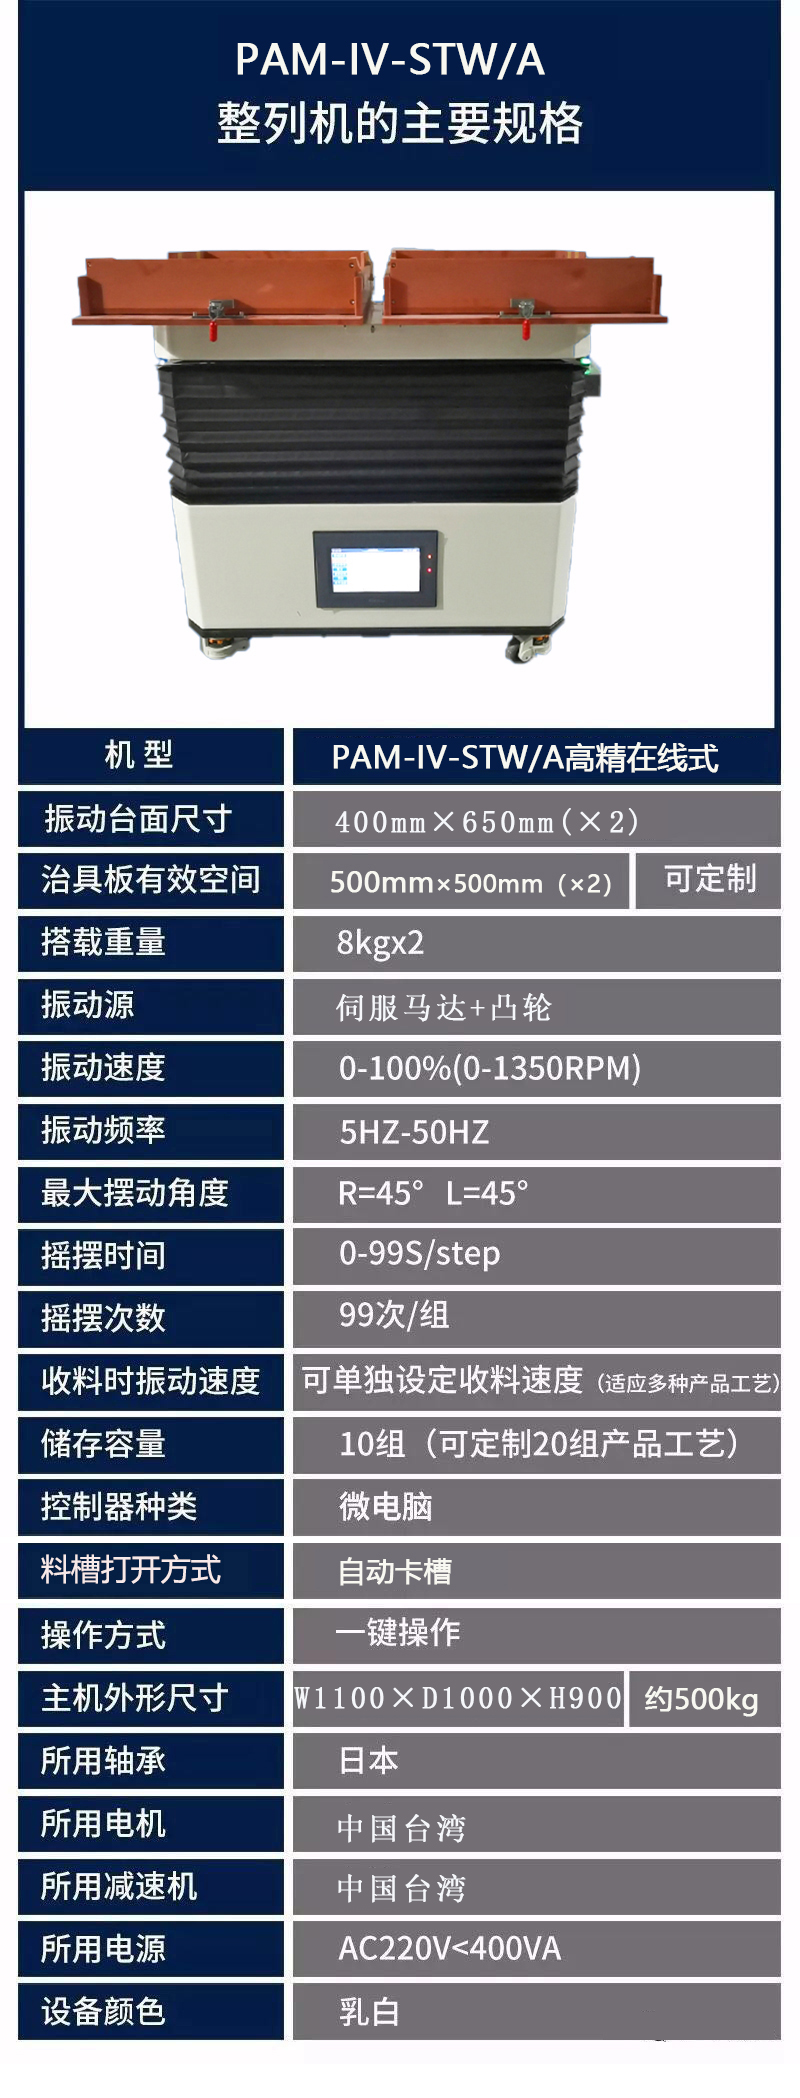 新版PAM-IV-STW-A